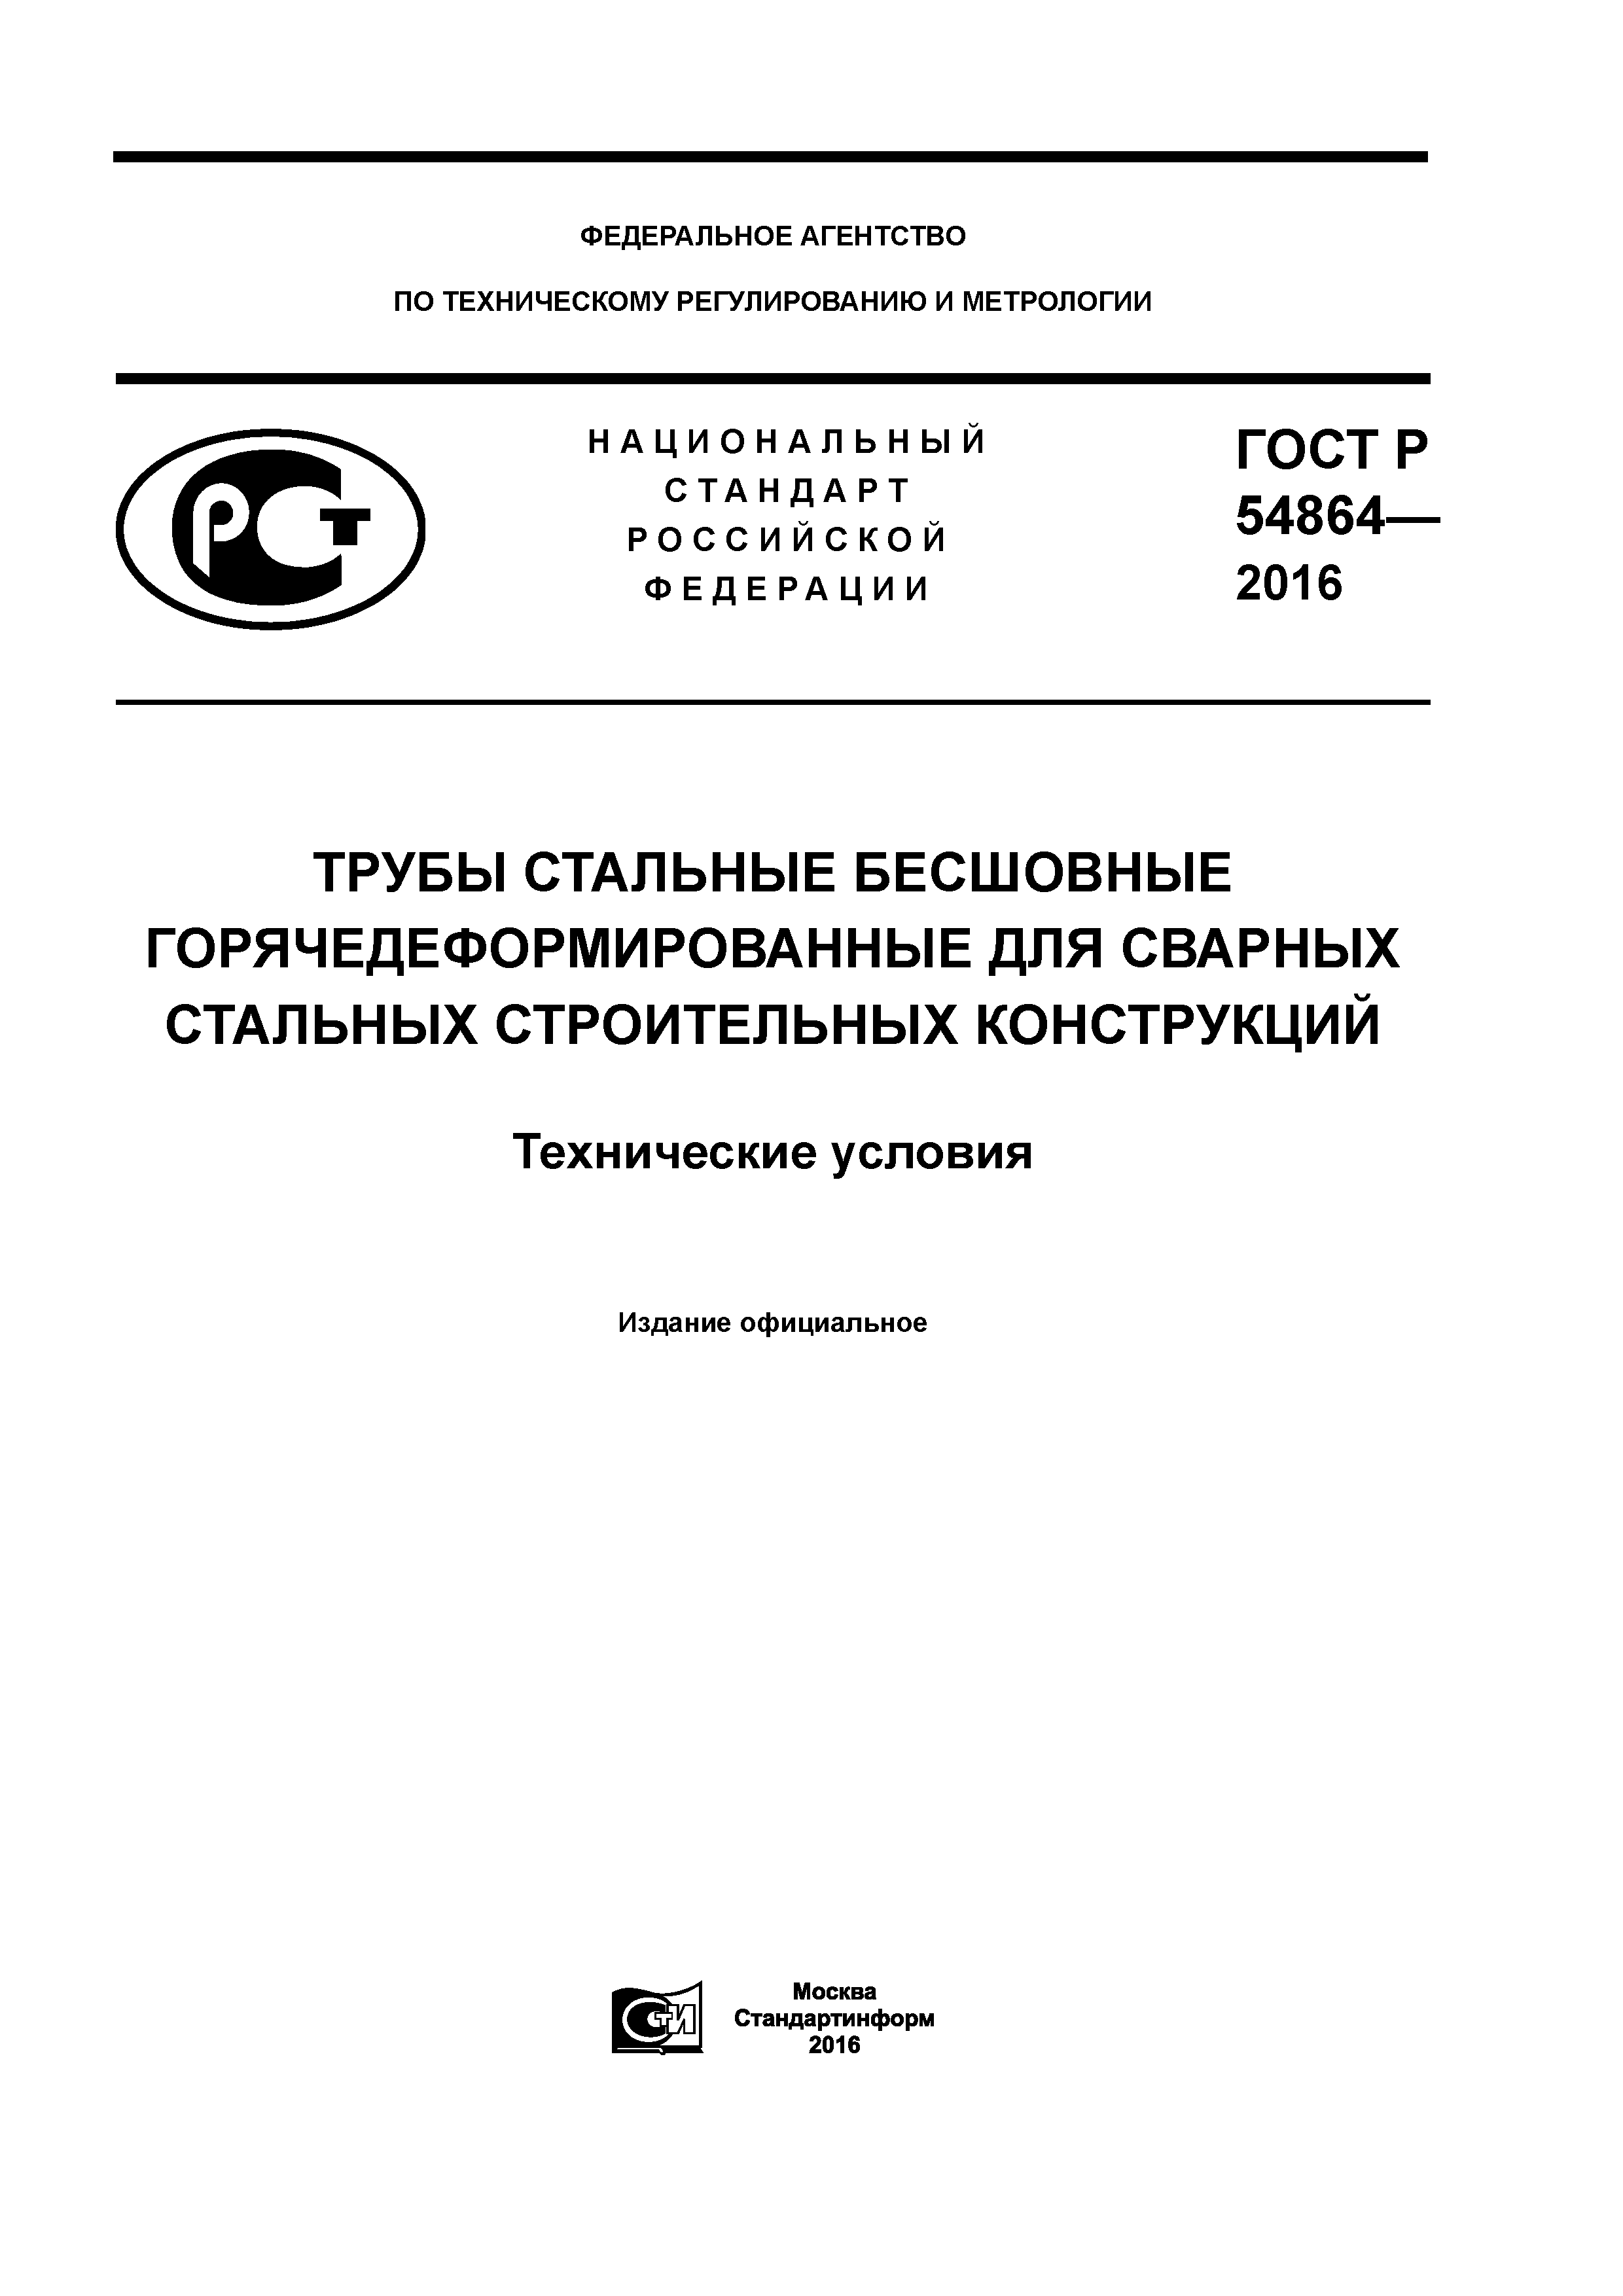 ГОСТ Р 54864-2016